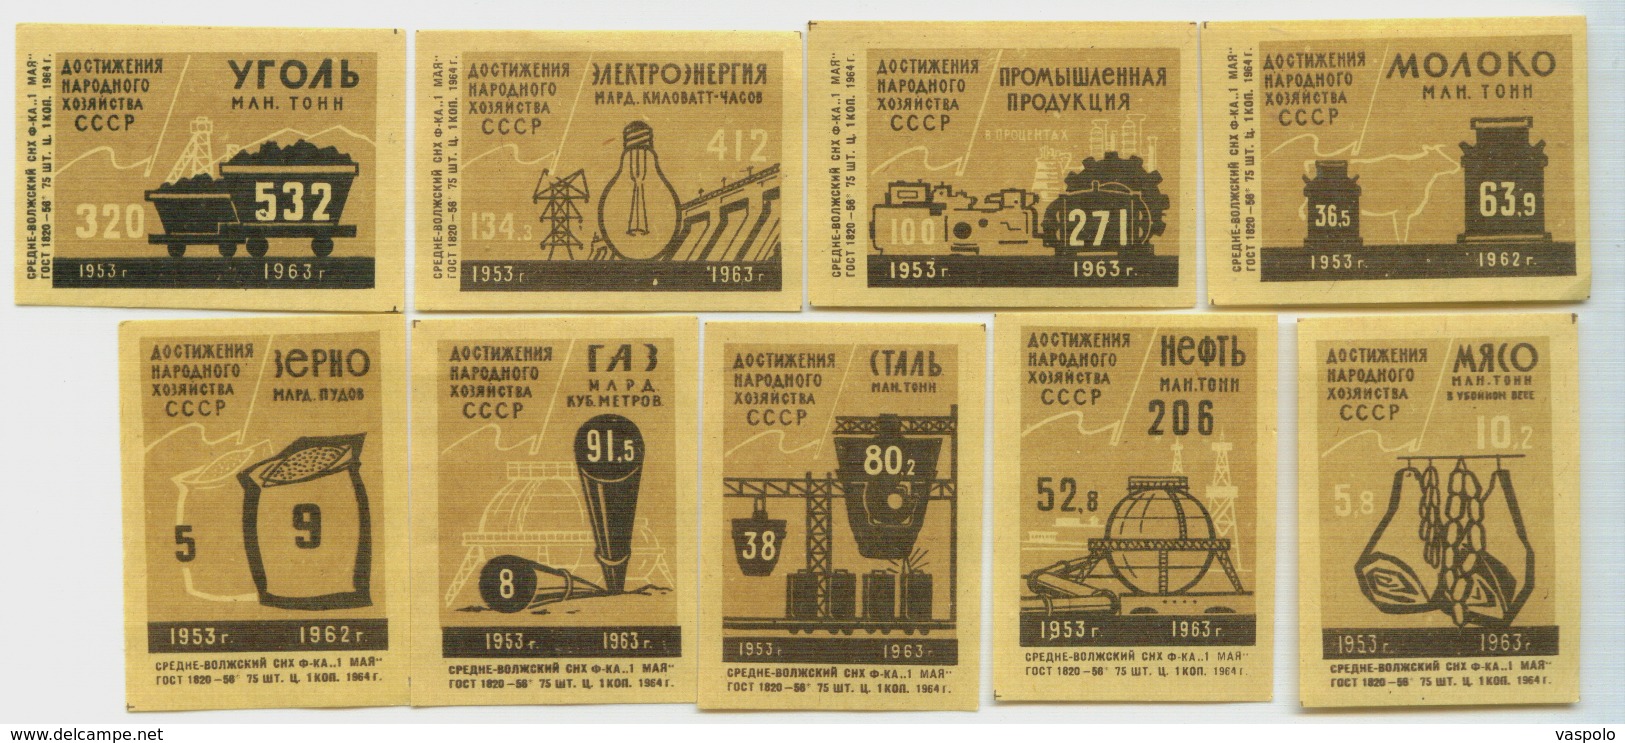 MATCHBOX LABELS RUSSIA CCCP URSS 1960's ACHIEVEMENTS OF THE COMMUNIST PERIOD 1953-1963 - Collections